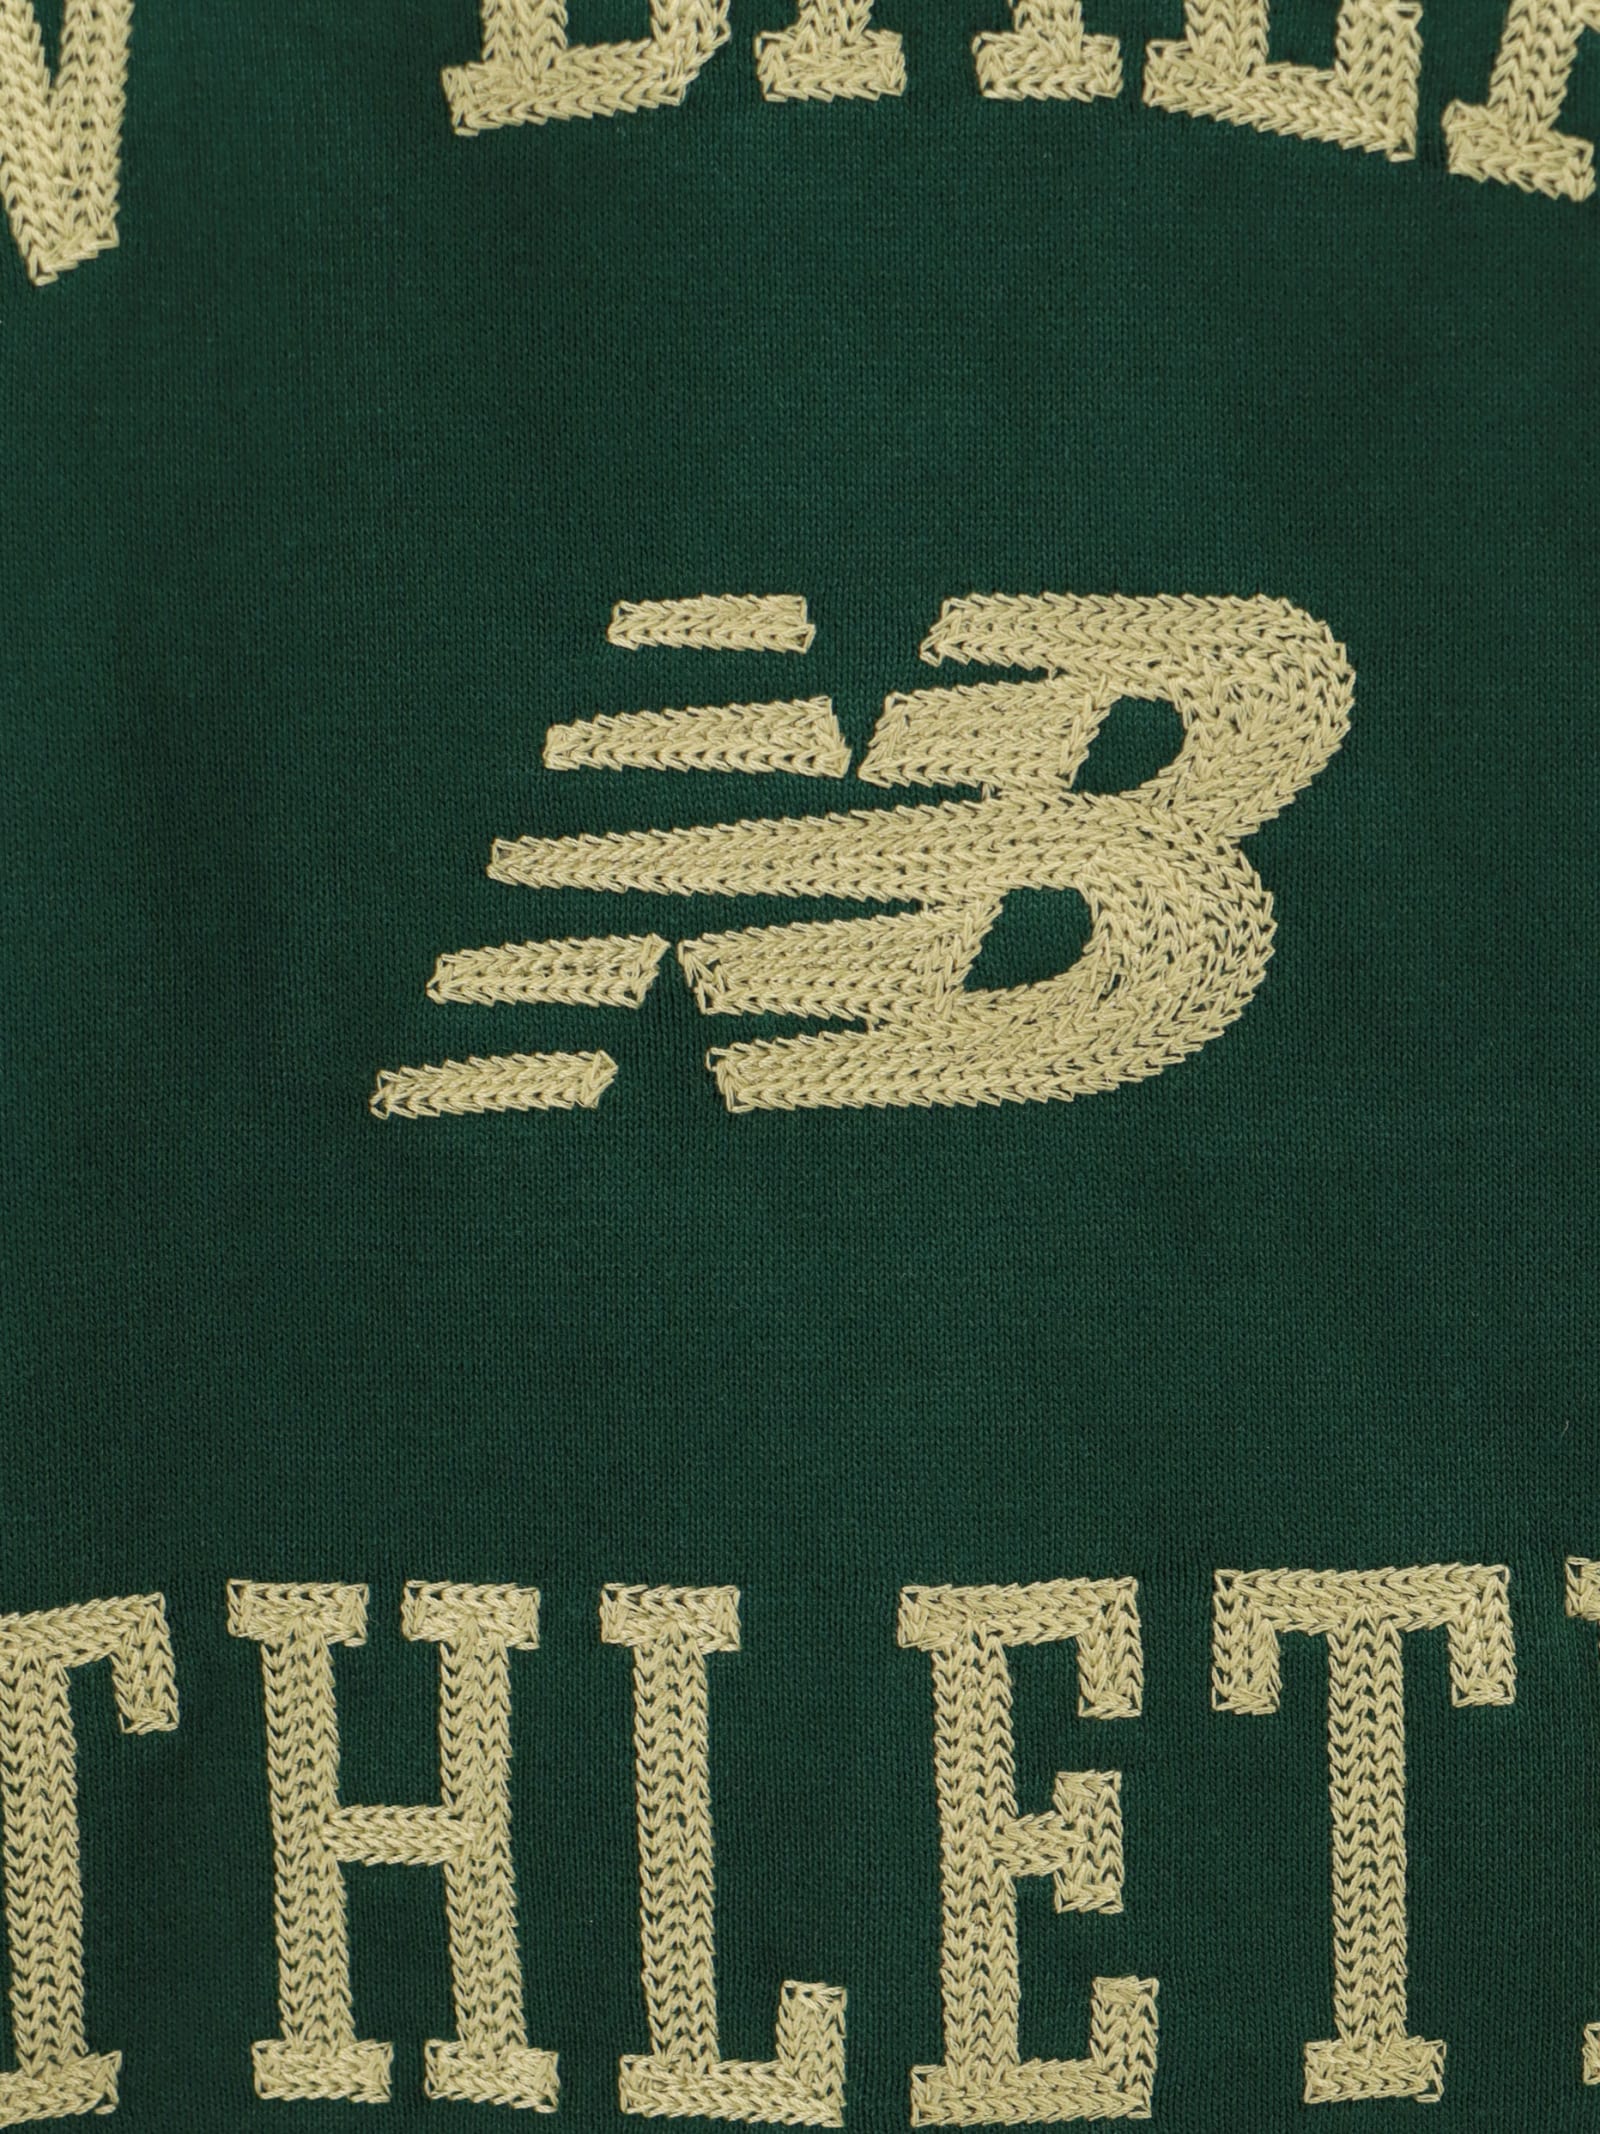 Shop New Balance Sweatshirt In Green